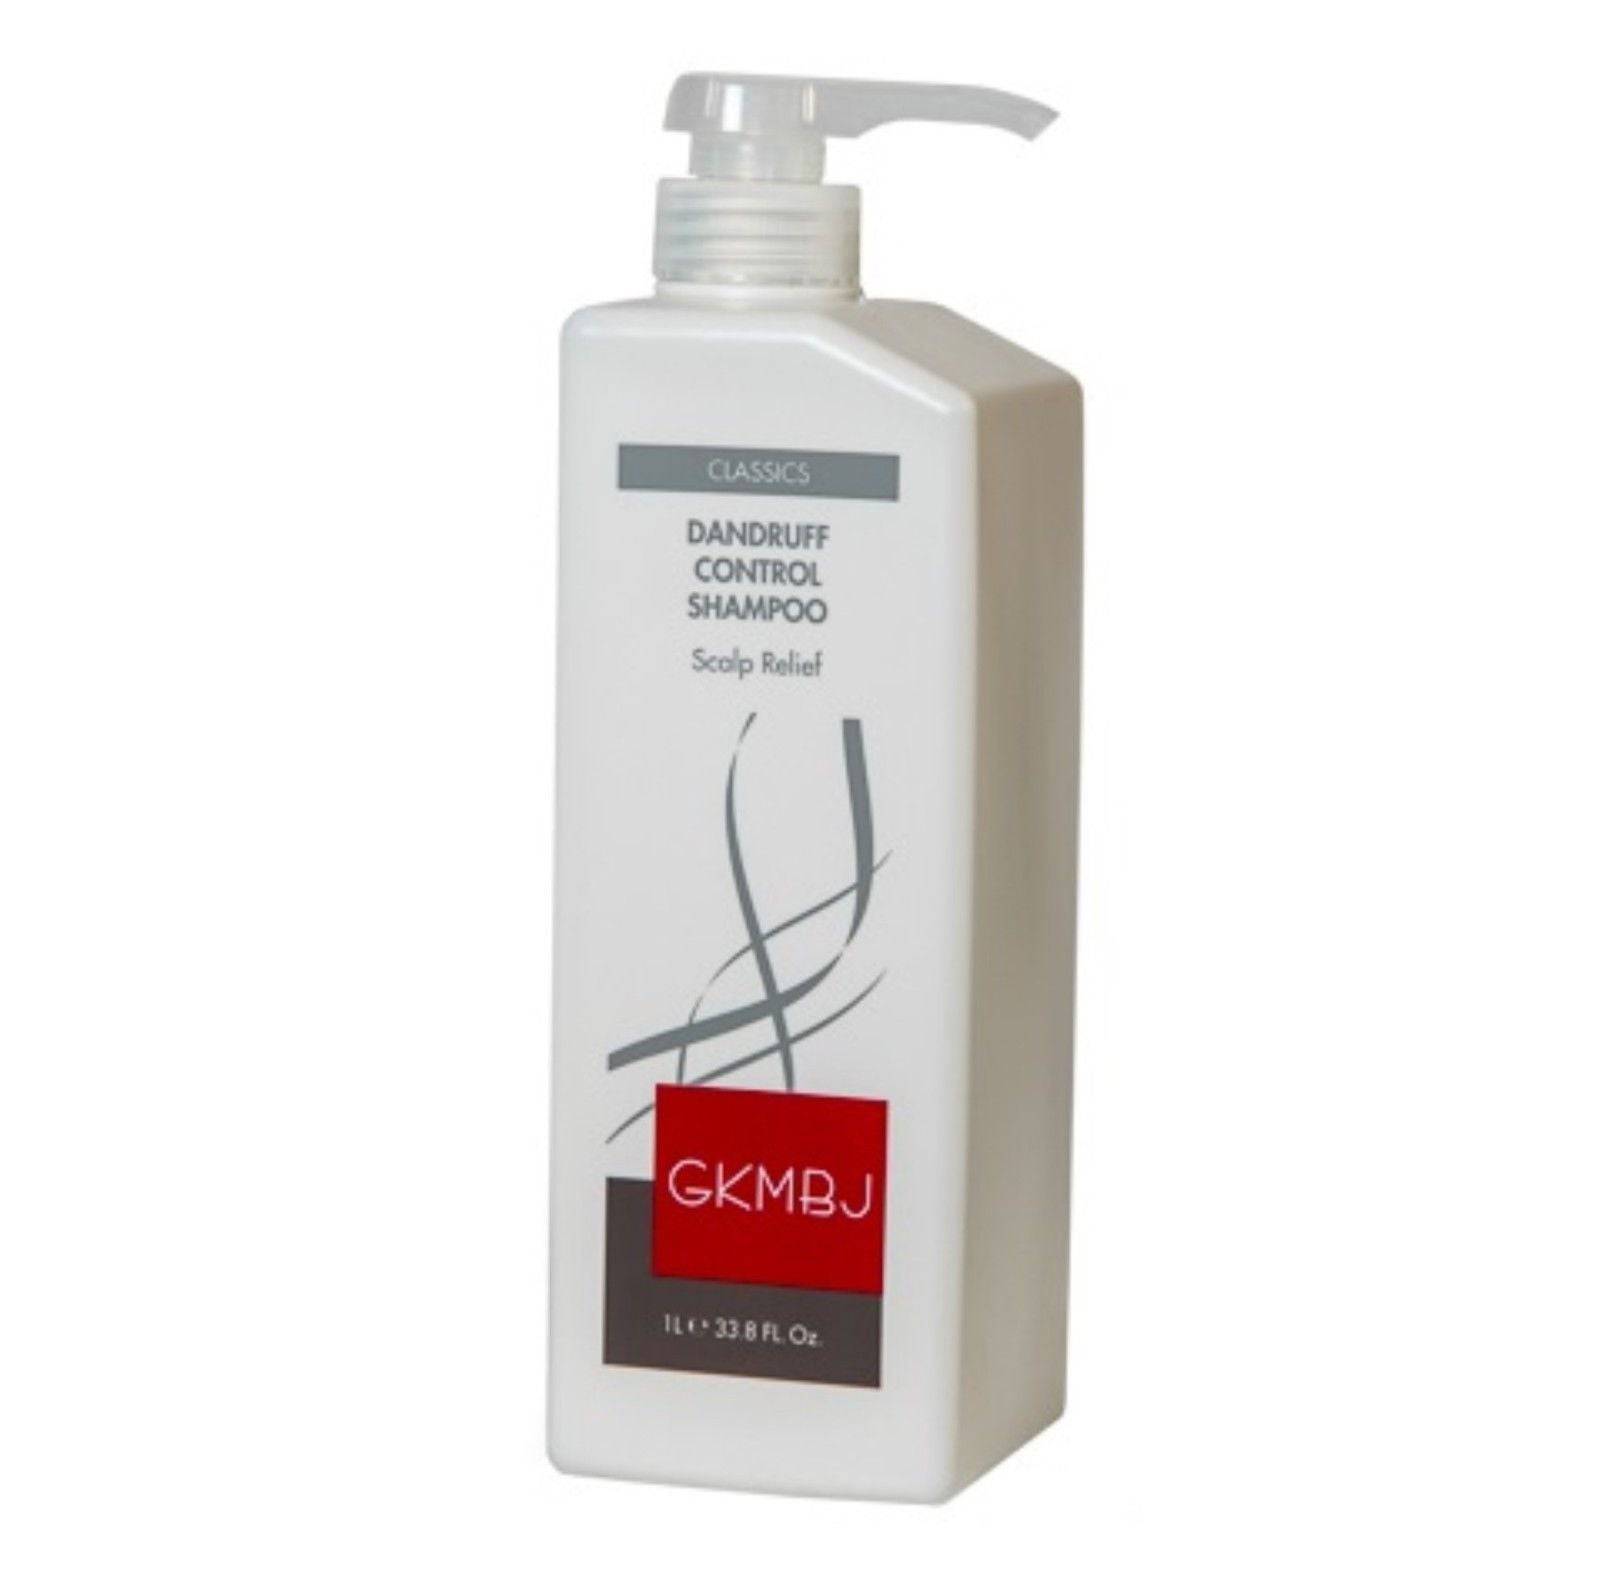 GKMBJ Dandruff Control Shampoo 1lt Improve Scalp - Protect - On Line Hair Depot